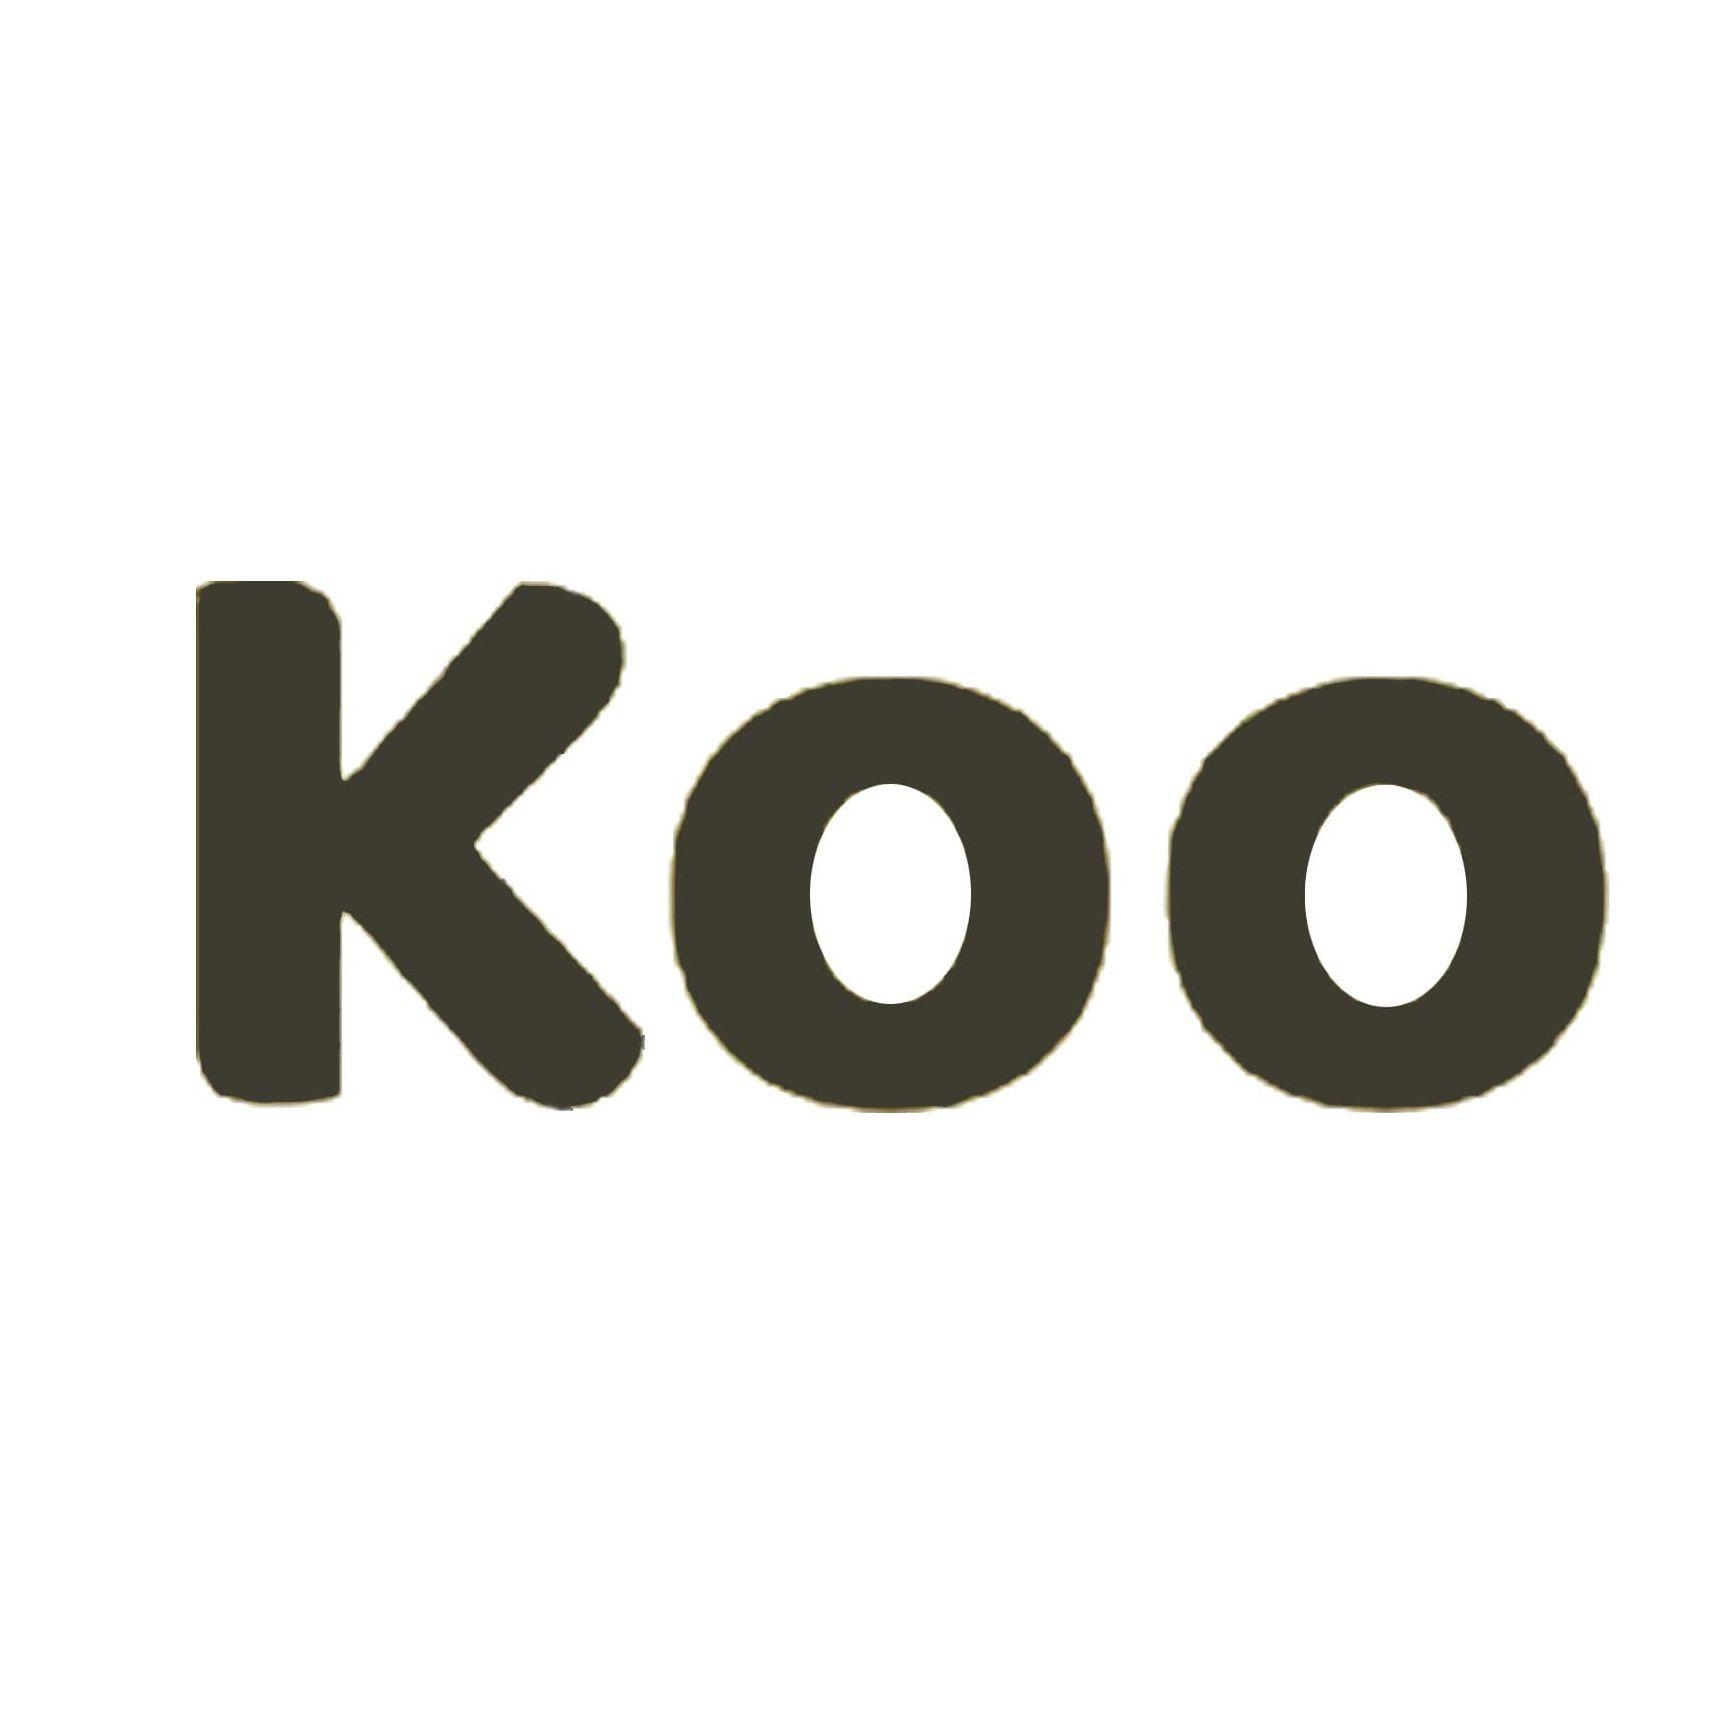 Player Koo67 avatar